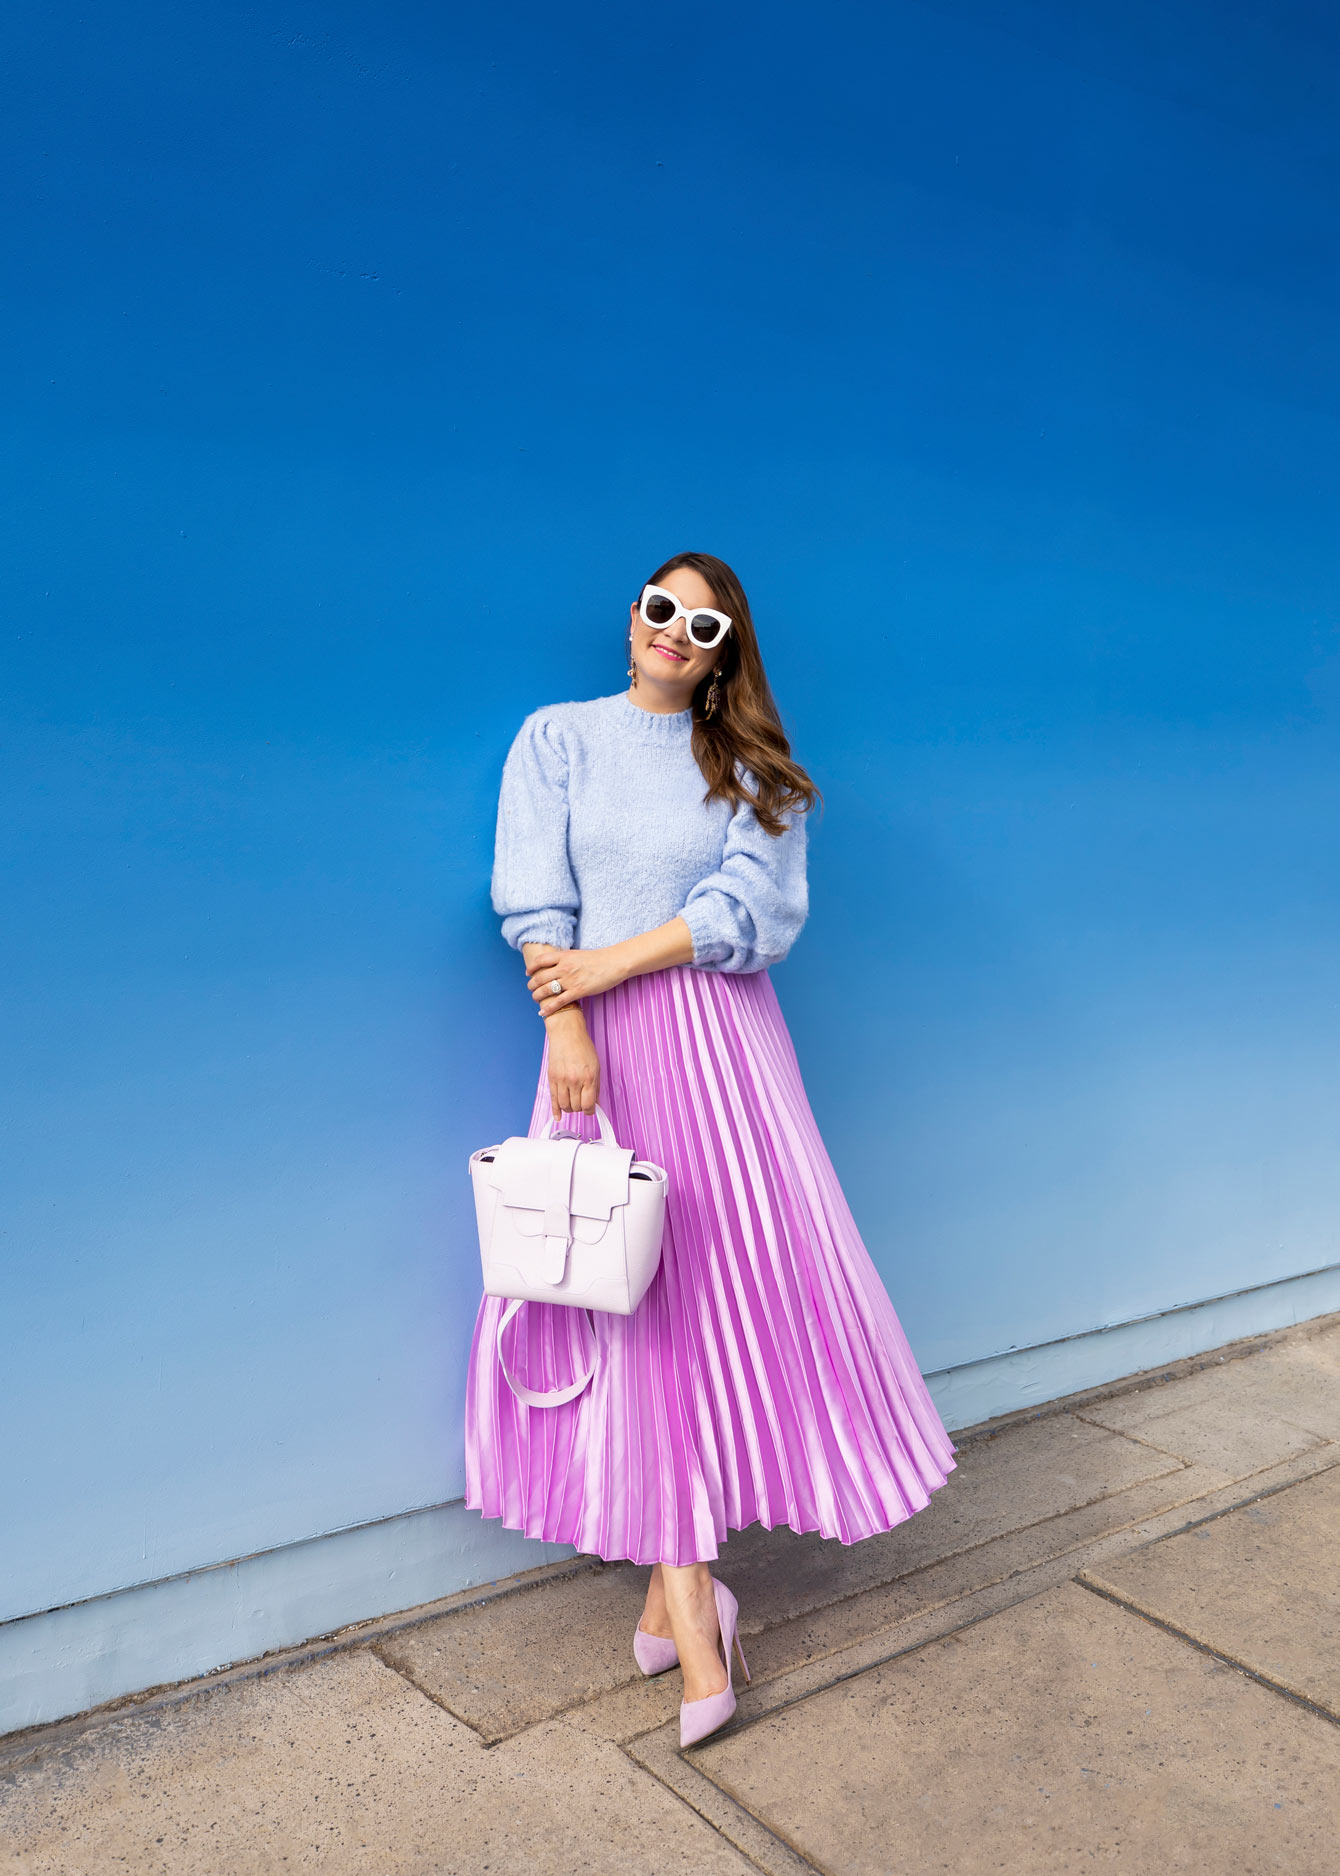 ASOS Lavender Pleated Midi Skirt - Style Charade